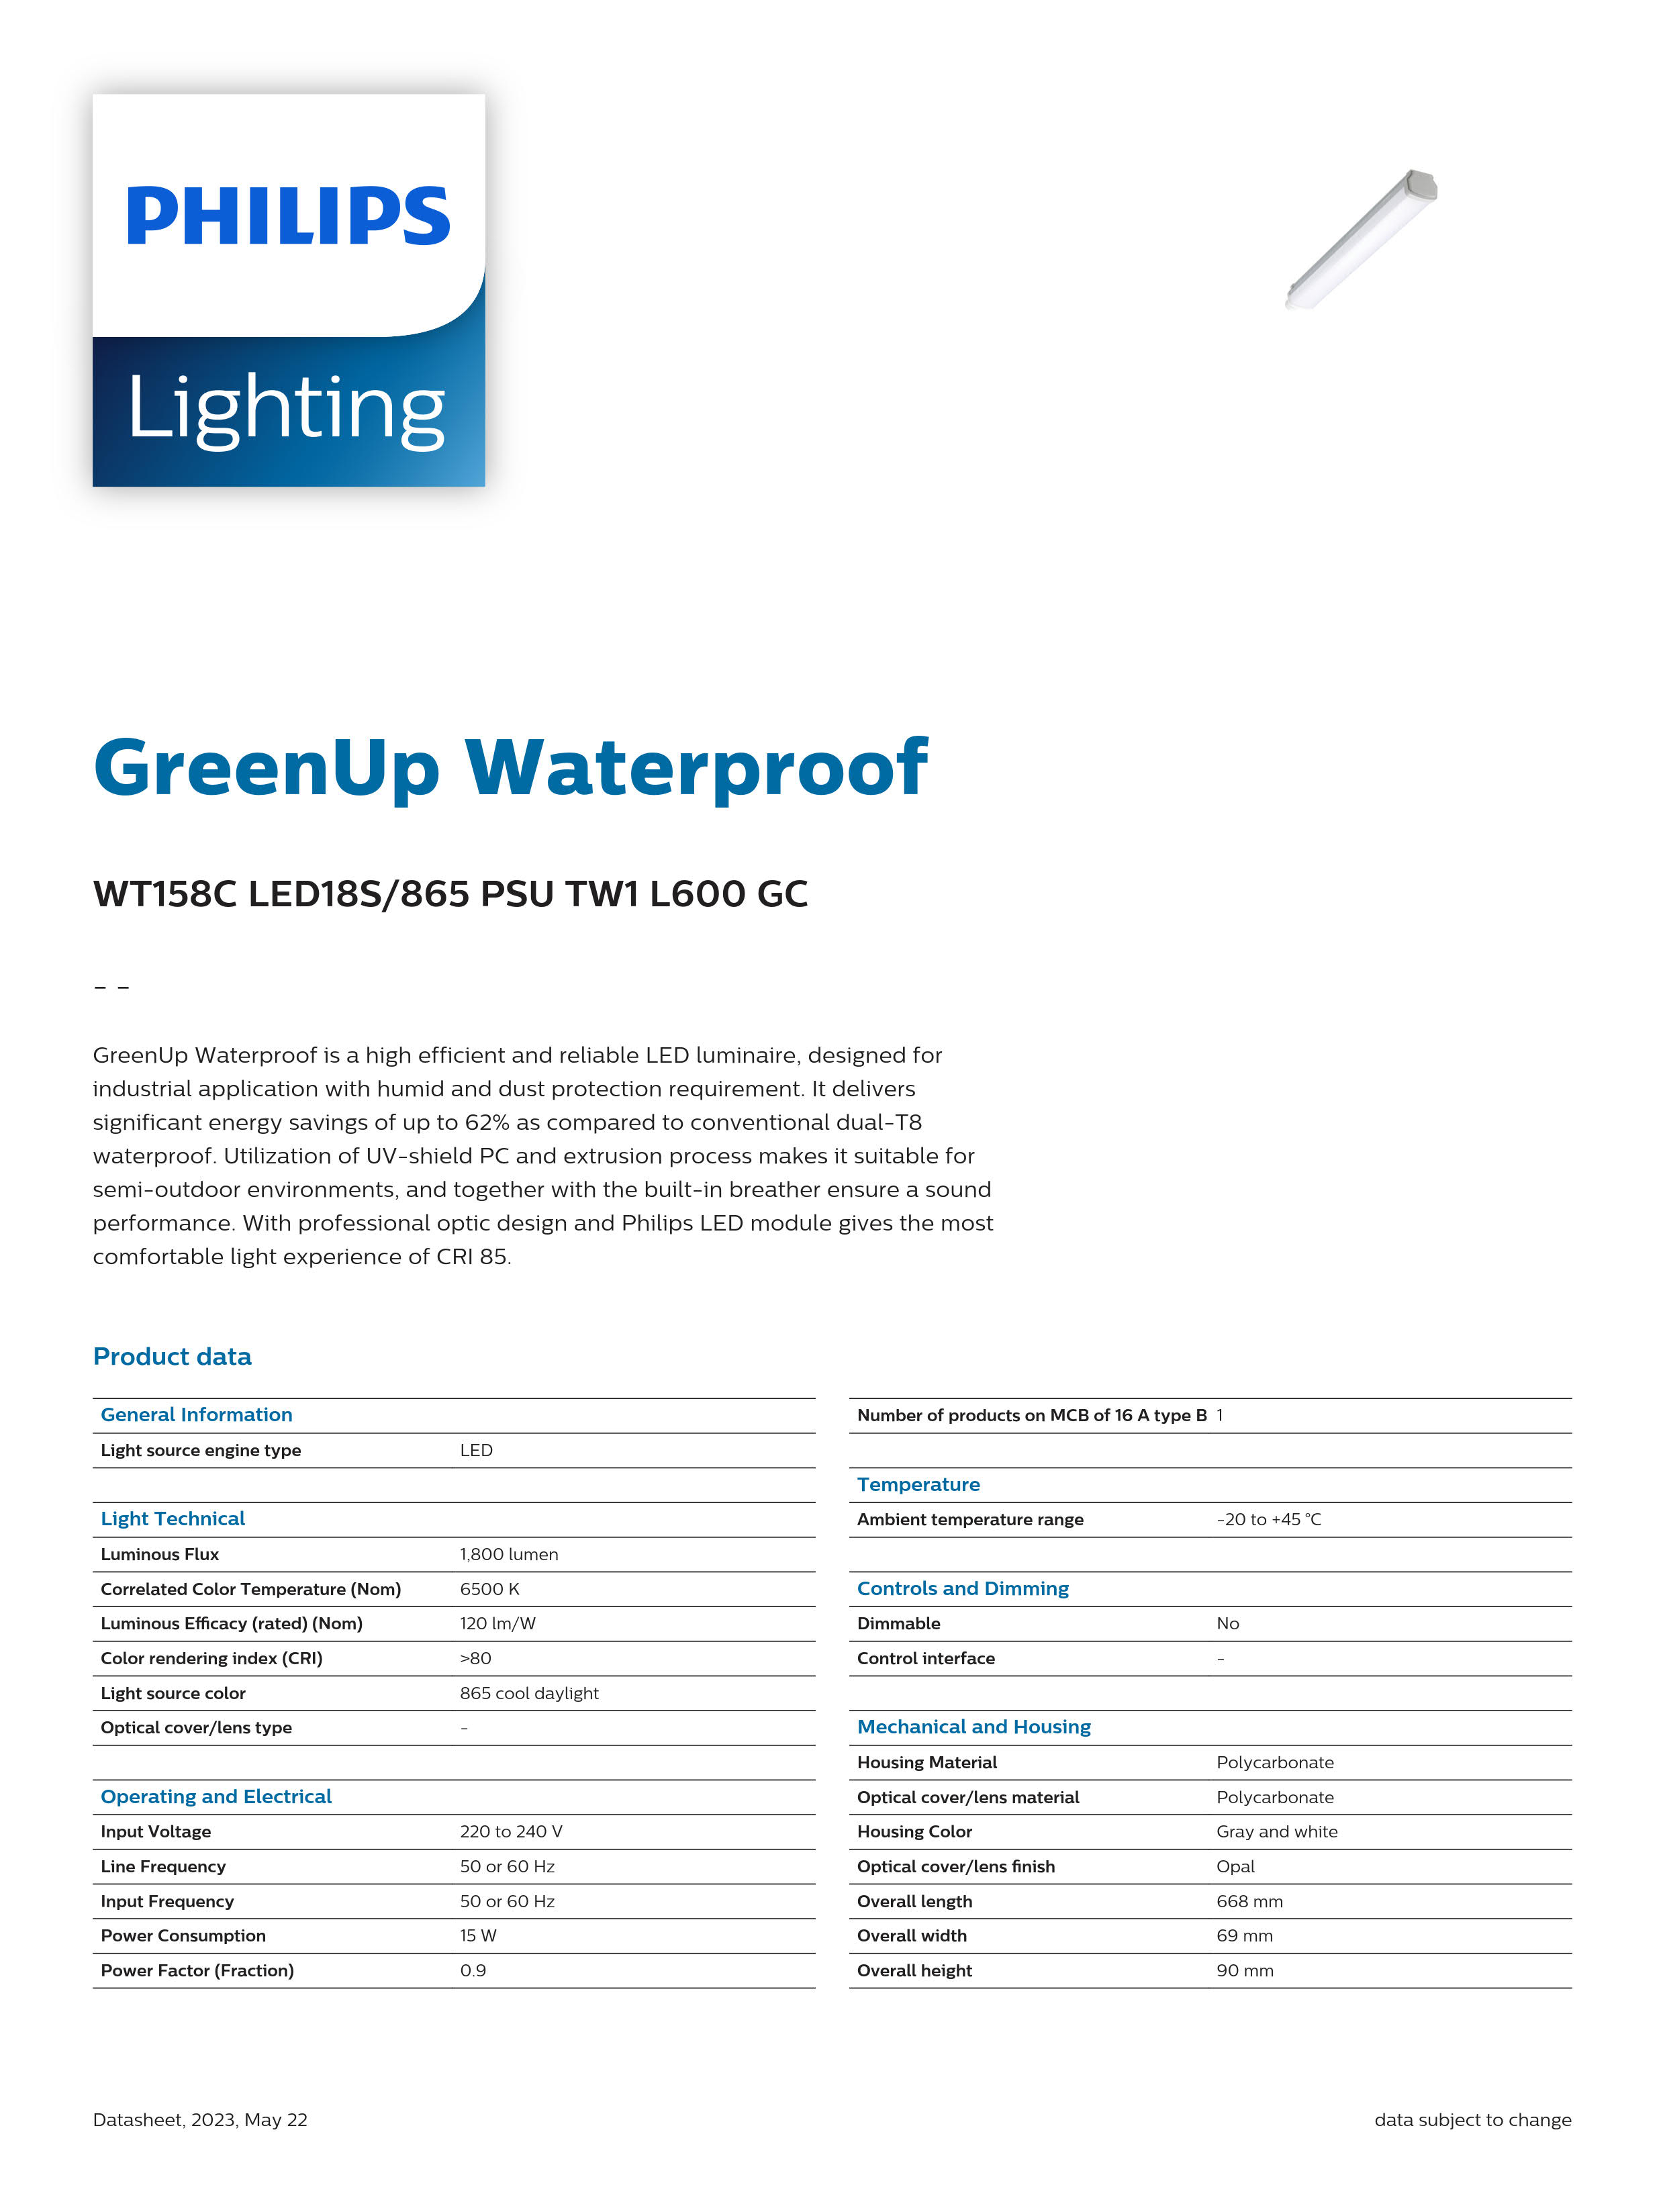 PHILIPS Waterproof WT158C LED18S/865 PSU TW1 L600 GC 911401894680